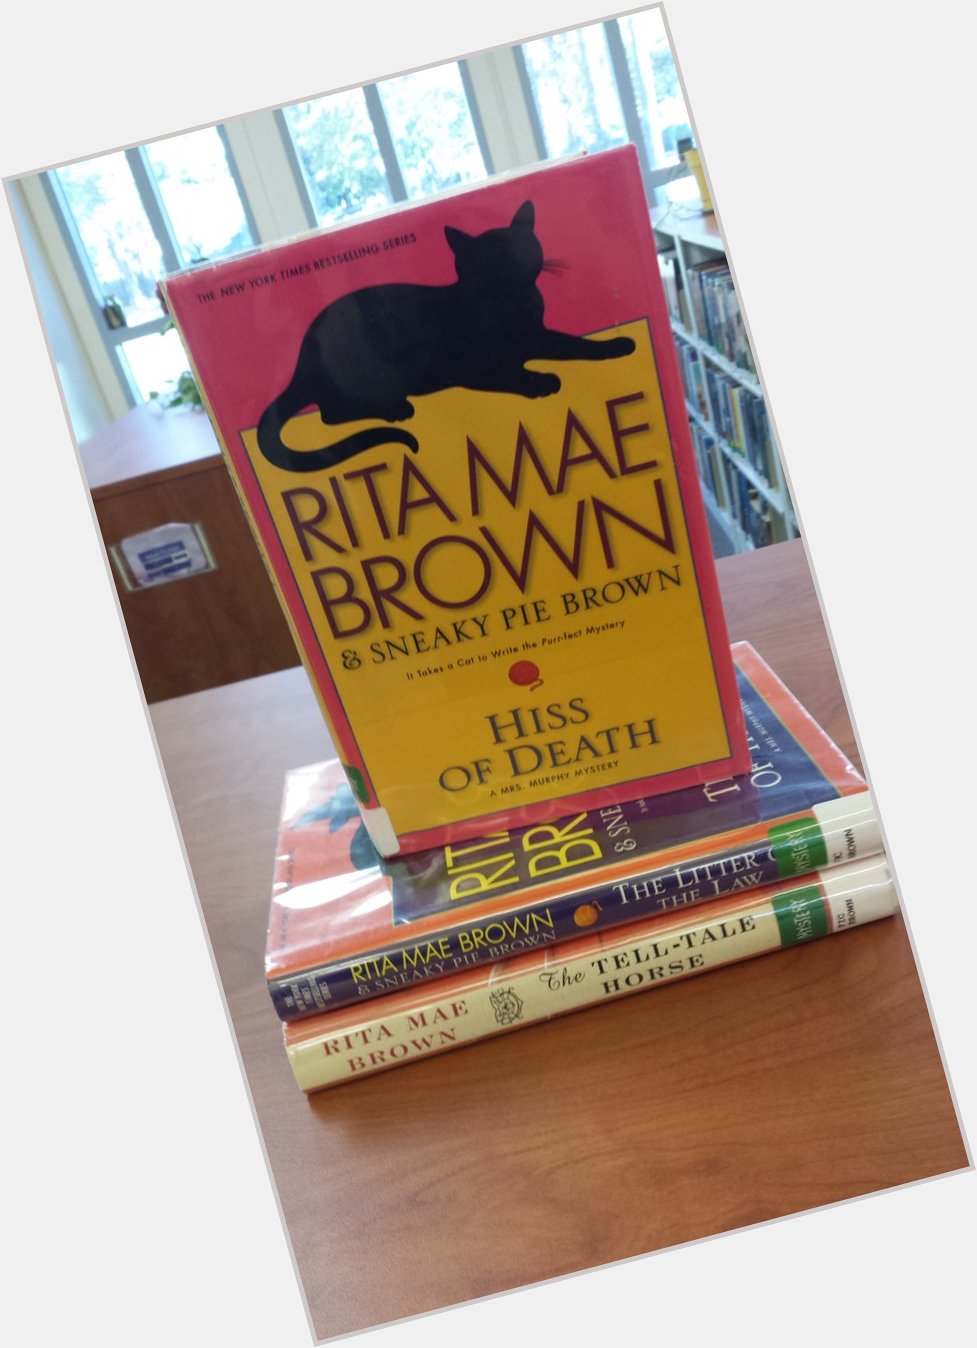 Happy Birthday to Mystery writer, Rita Mae Brown! 